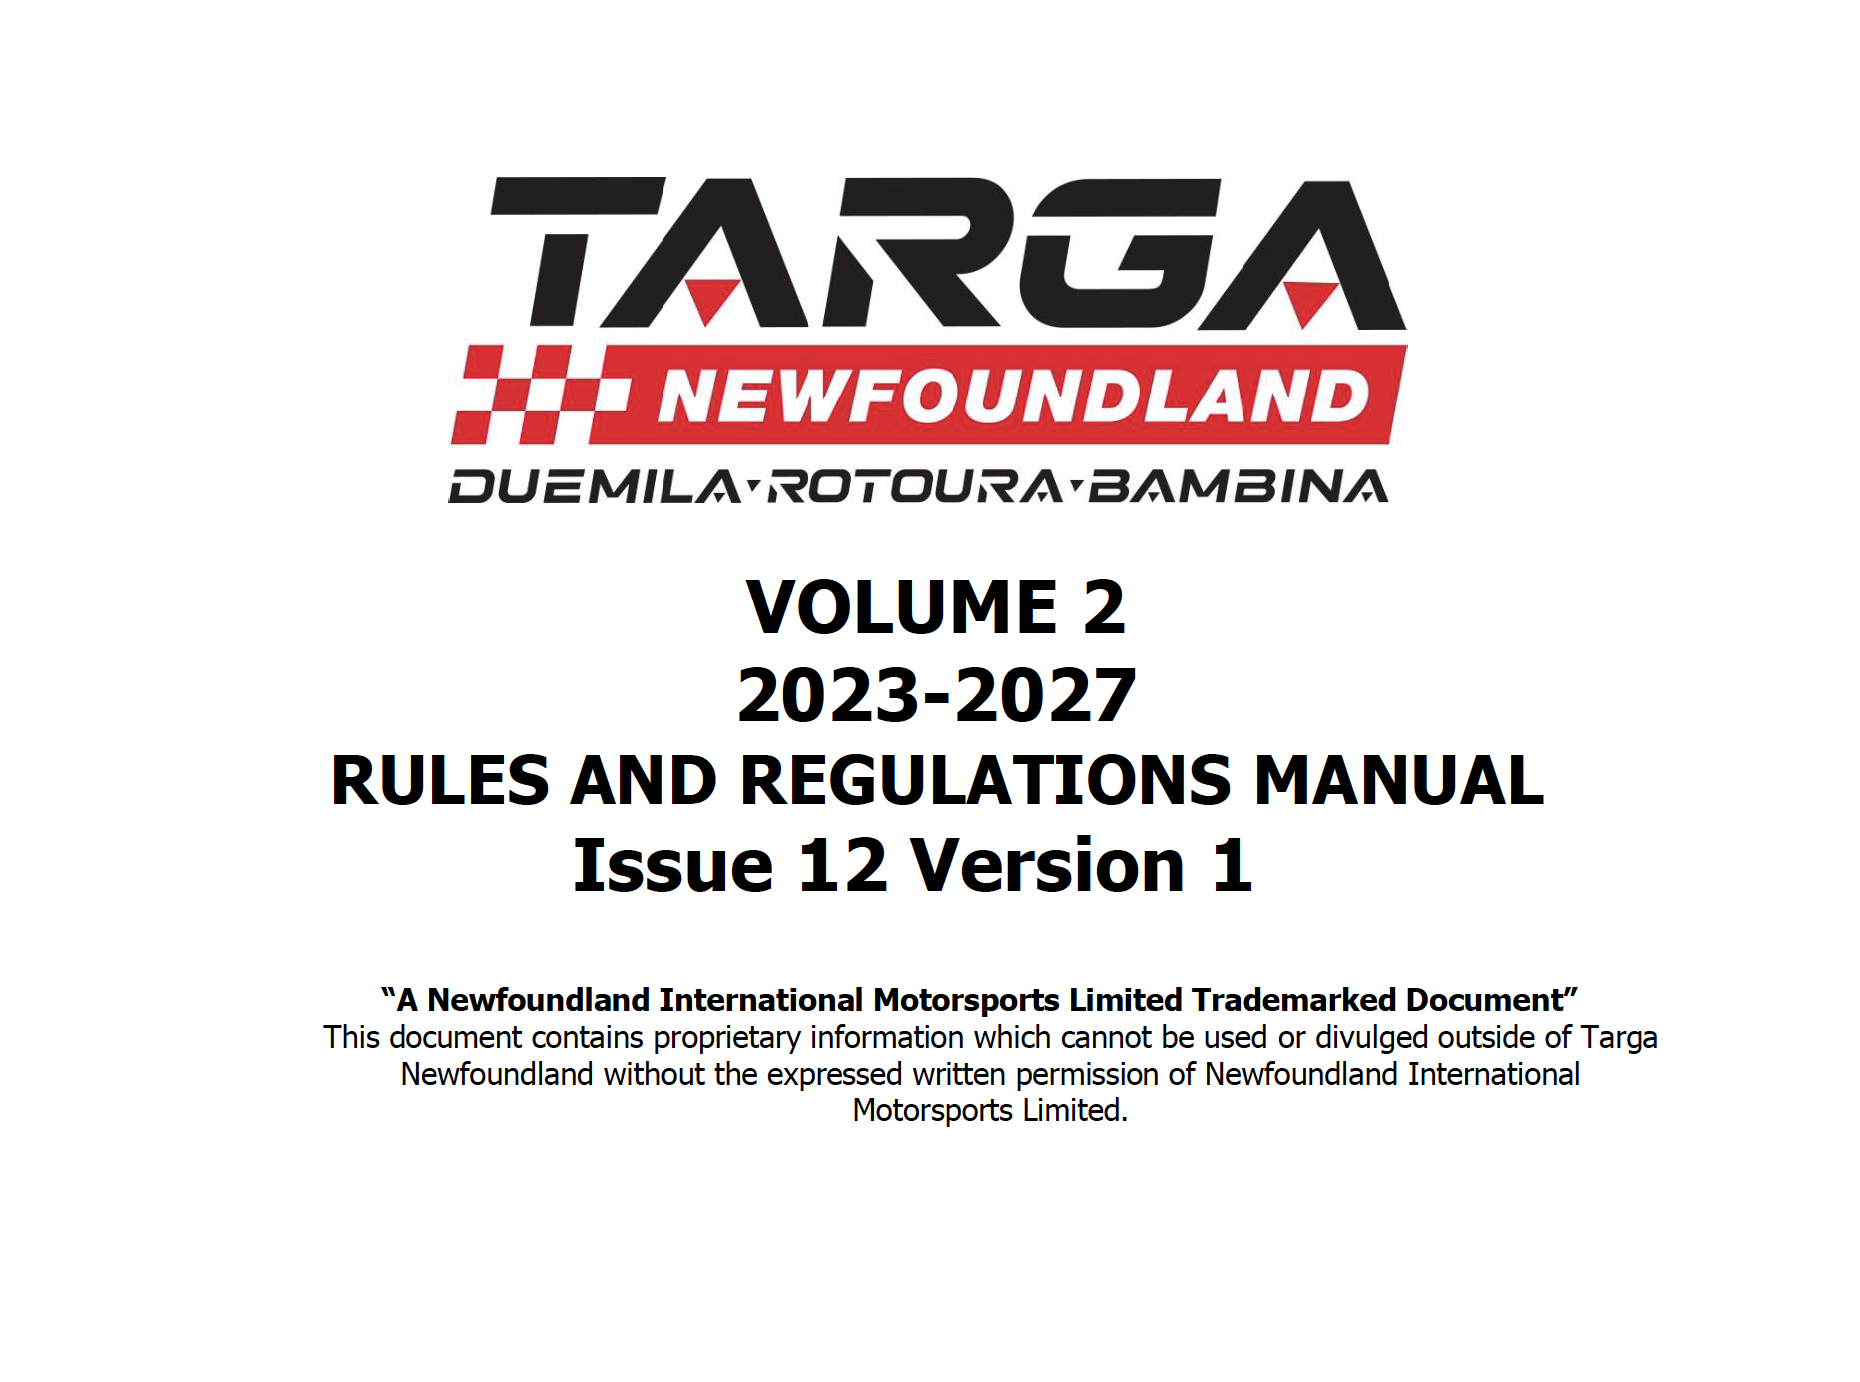 Targa Newfoundland improves on safety ahead of return in 2023